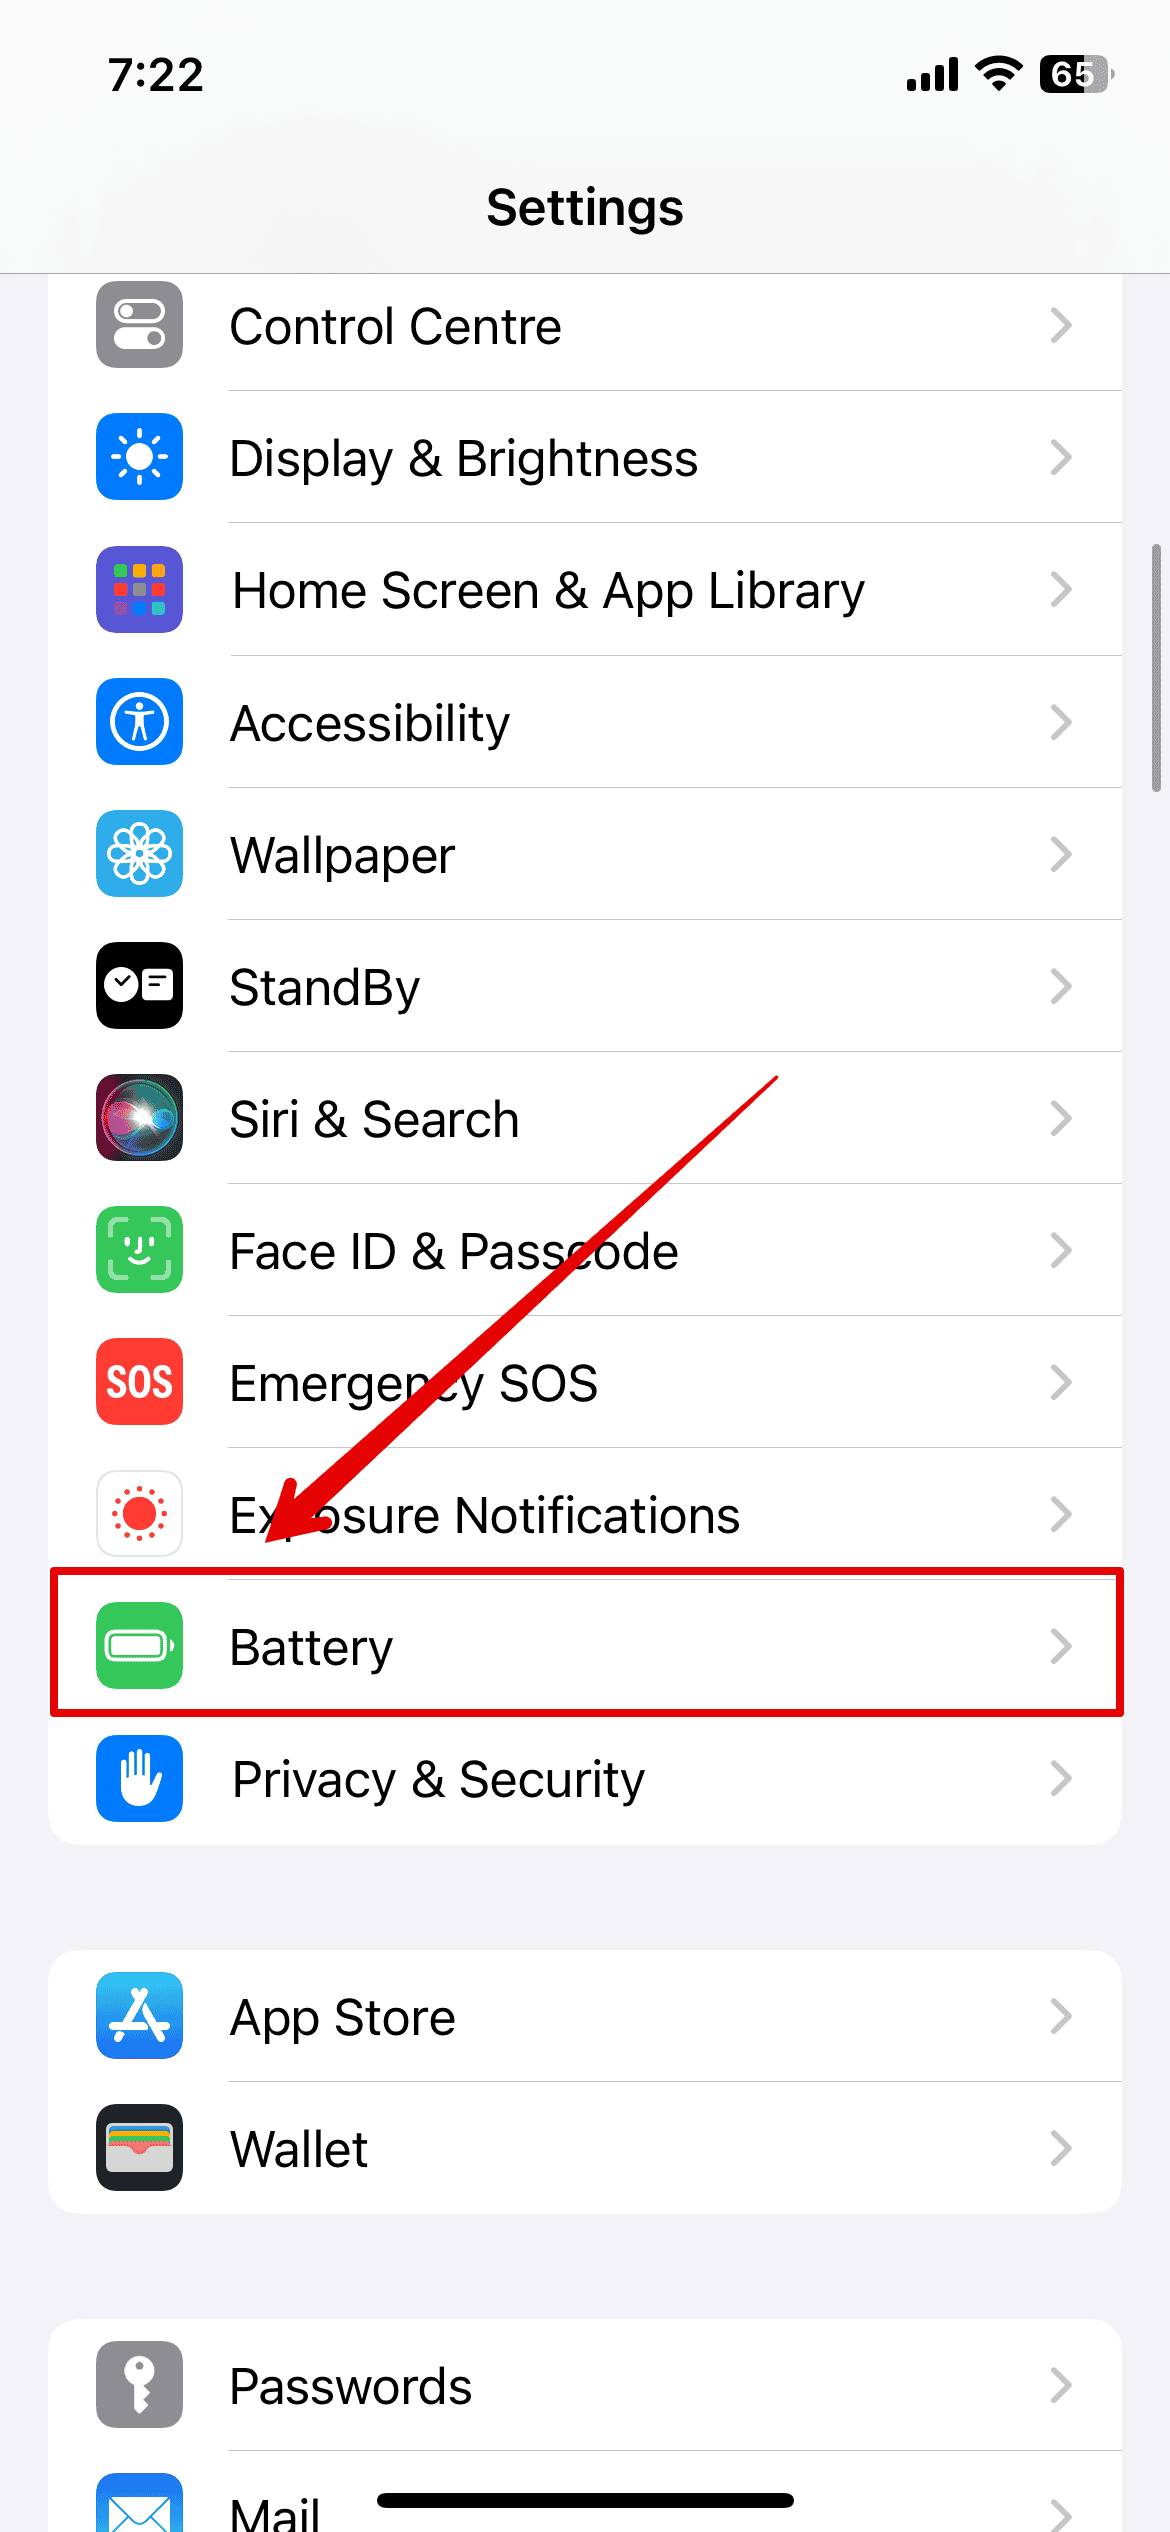 Open Battery from settings